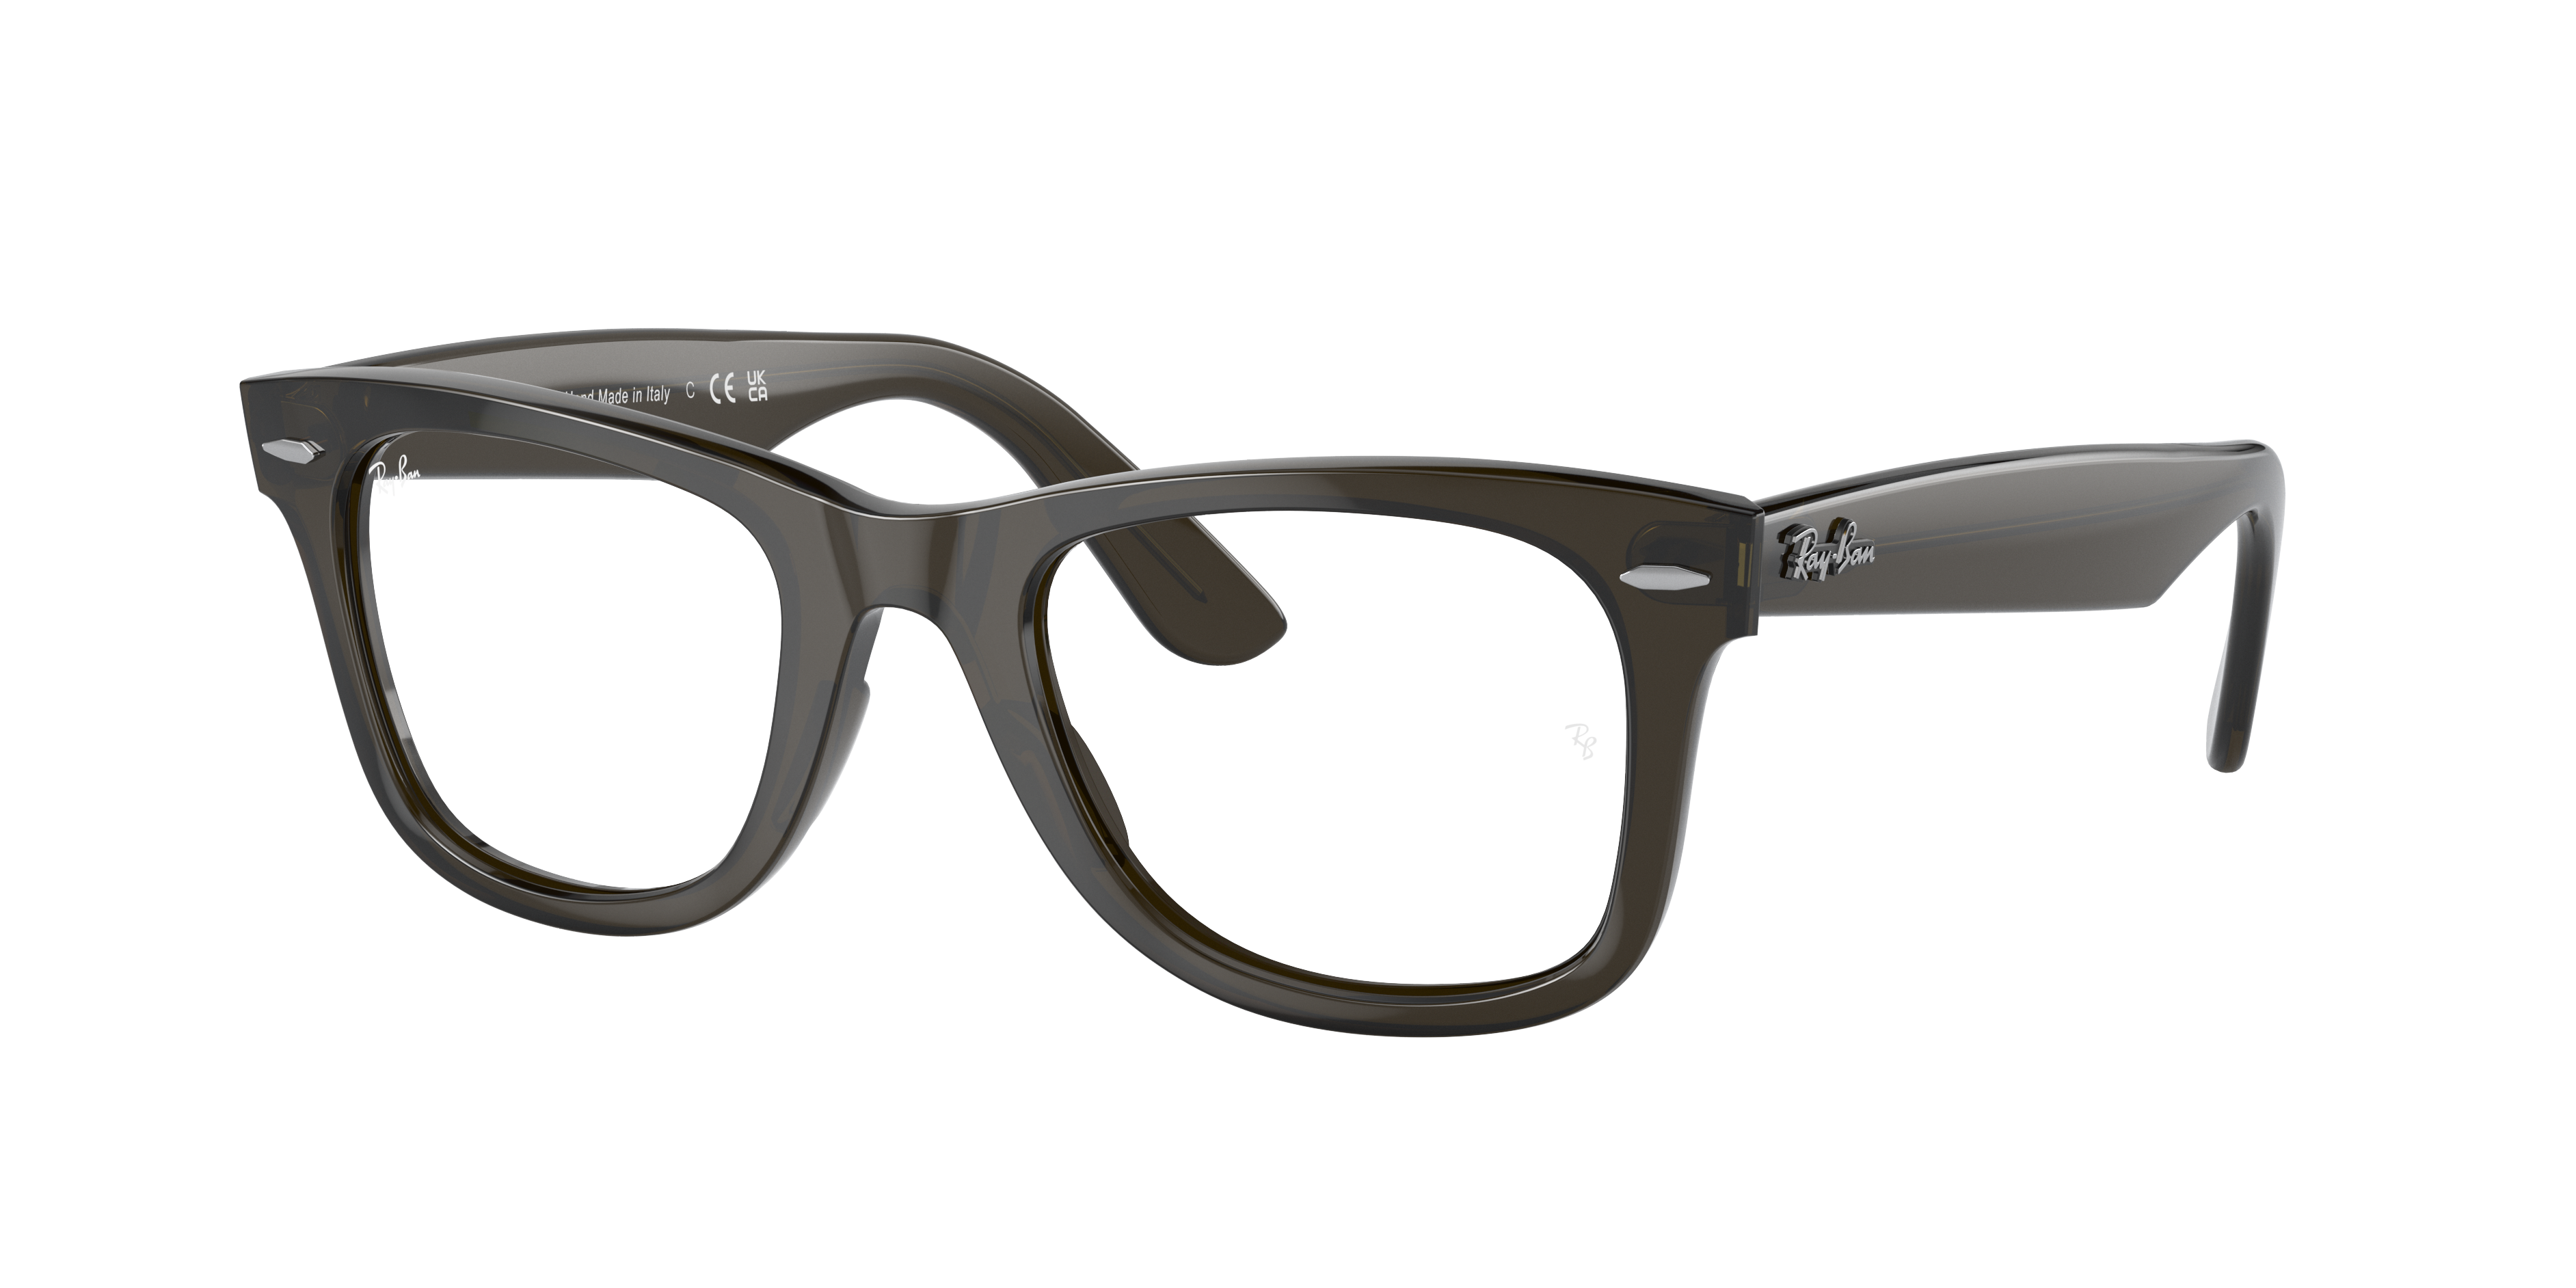 Wayfarer Ease Optics Eyeglasses with Transparent Olive Green Frame | Ray-Ban ®